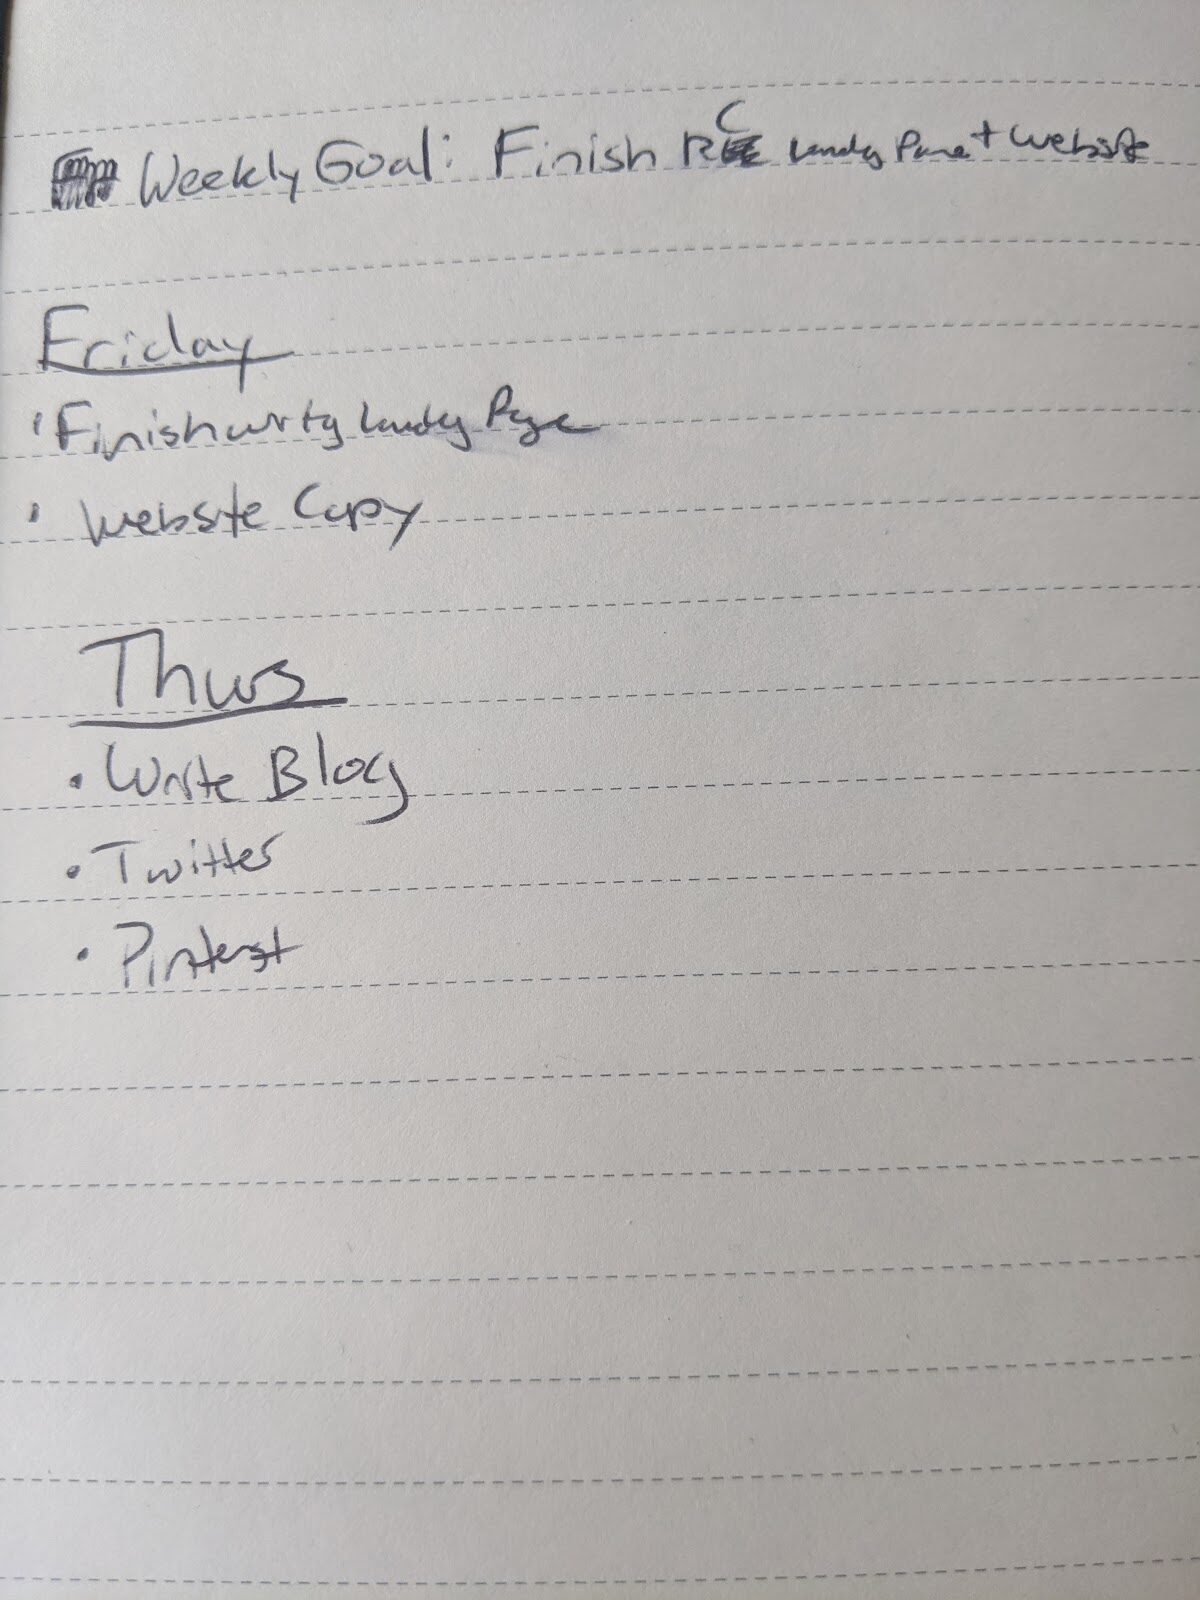 most important tasks journal